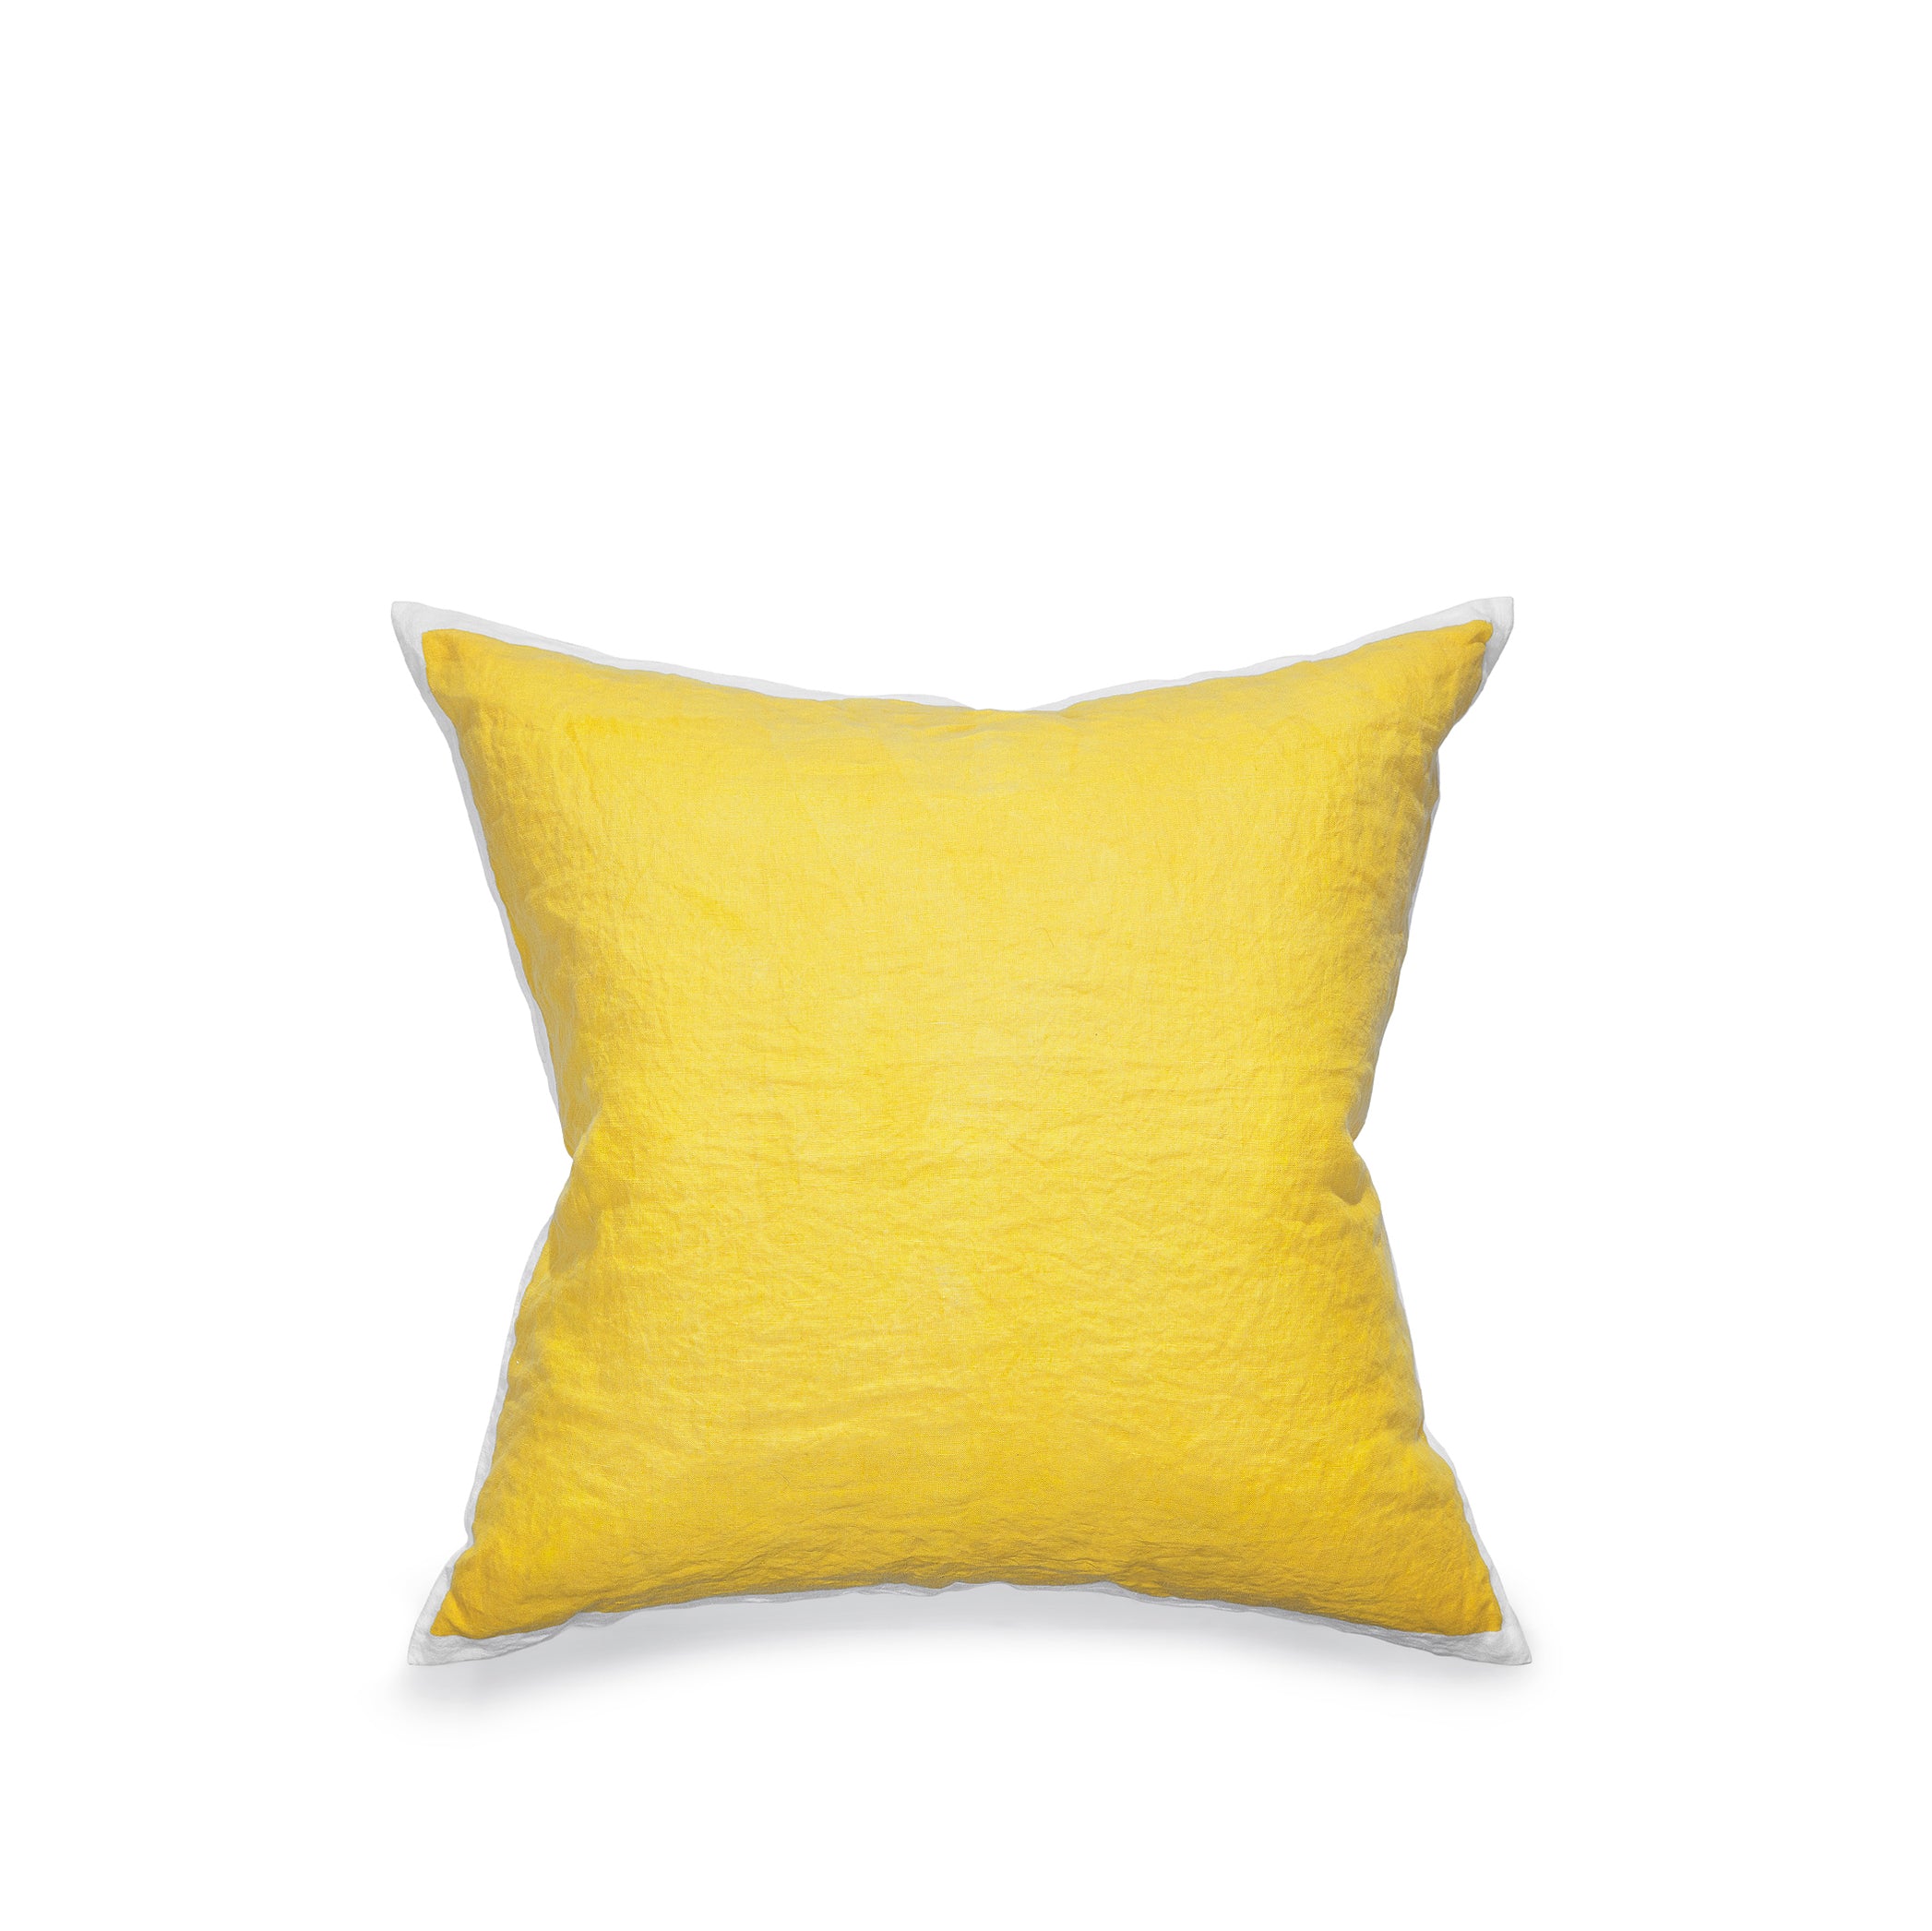 Hand Painted Linen Cushion in Lemon Yellow, 60cm x 60cm